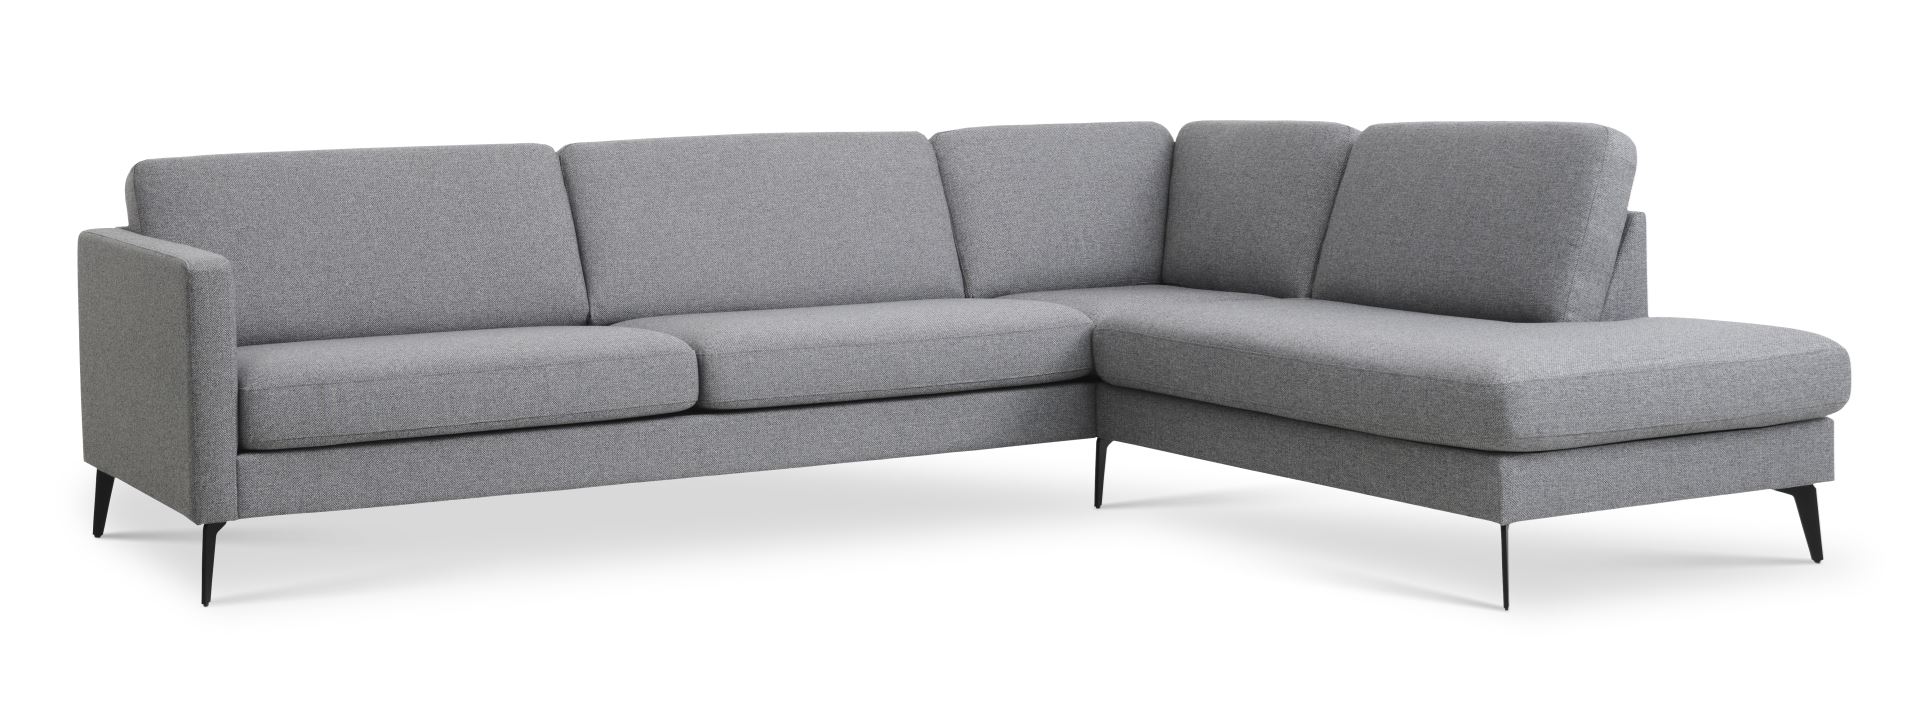 Ask sæt 61 stor OE sofa, m. højre chaiselong - lys granitgrå polyester stof og Eiffel ben